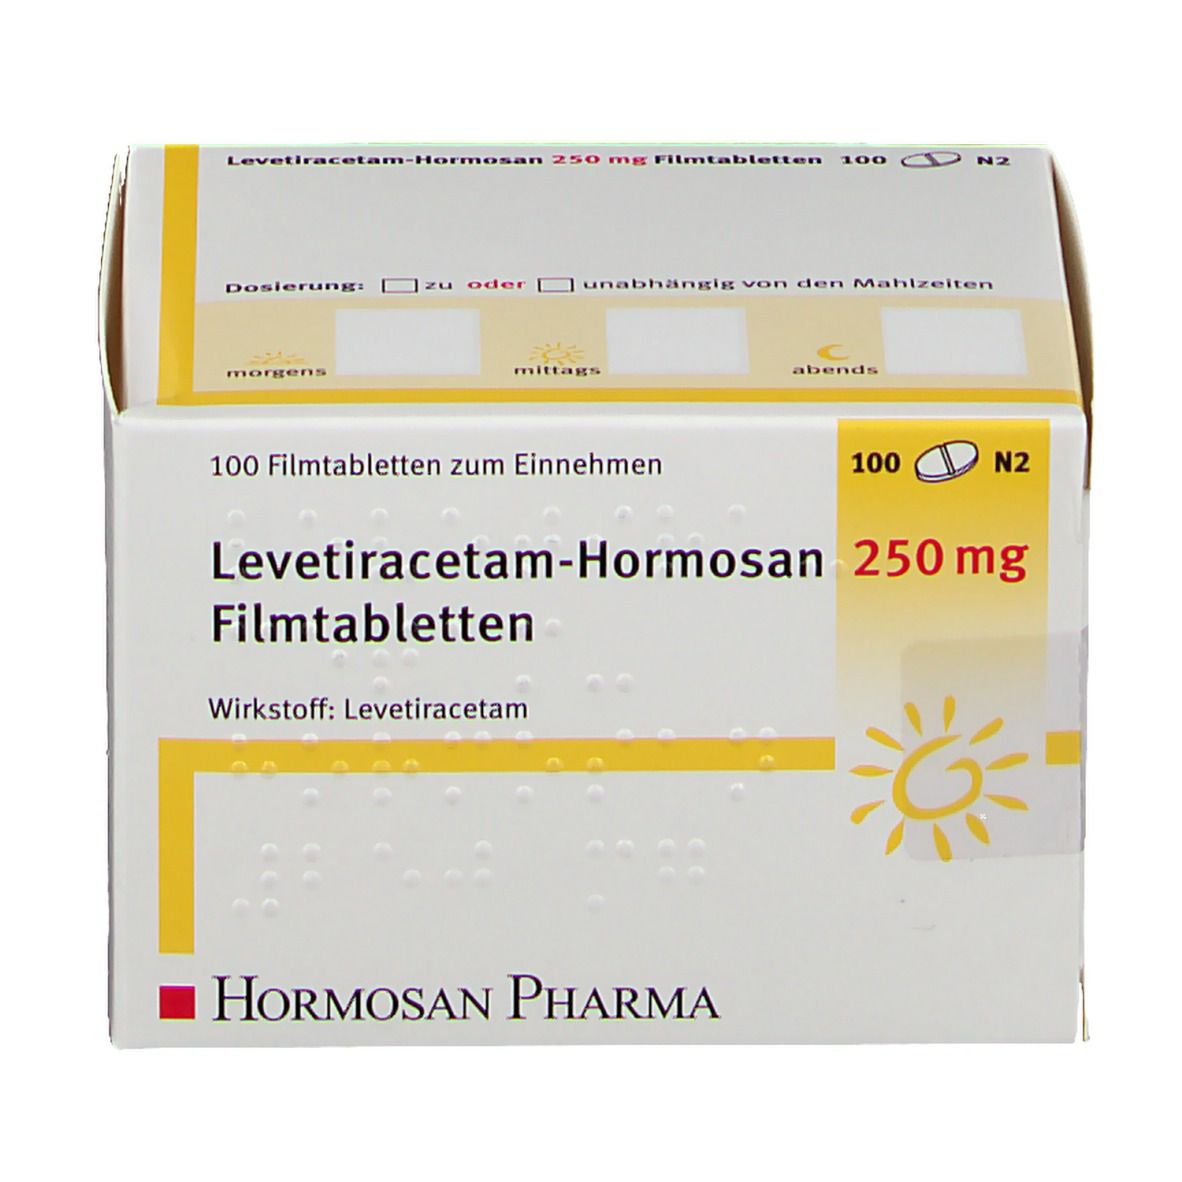 Levetiracetam-Hormosan 250 mg